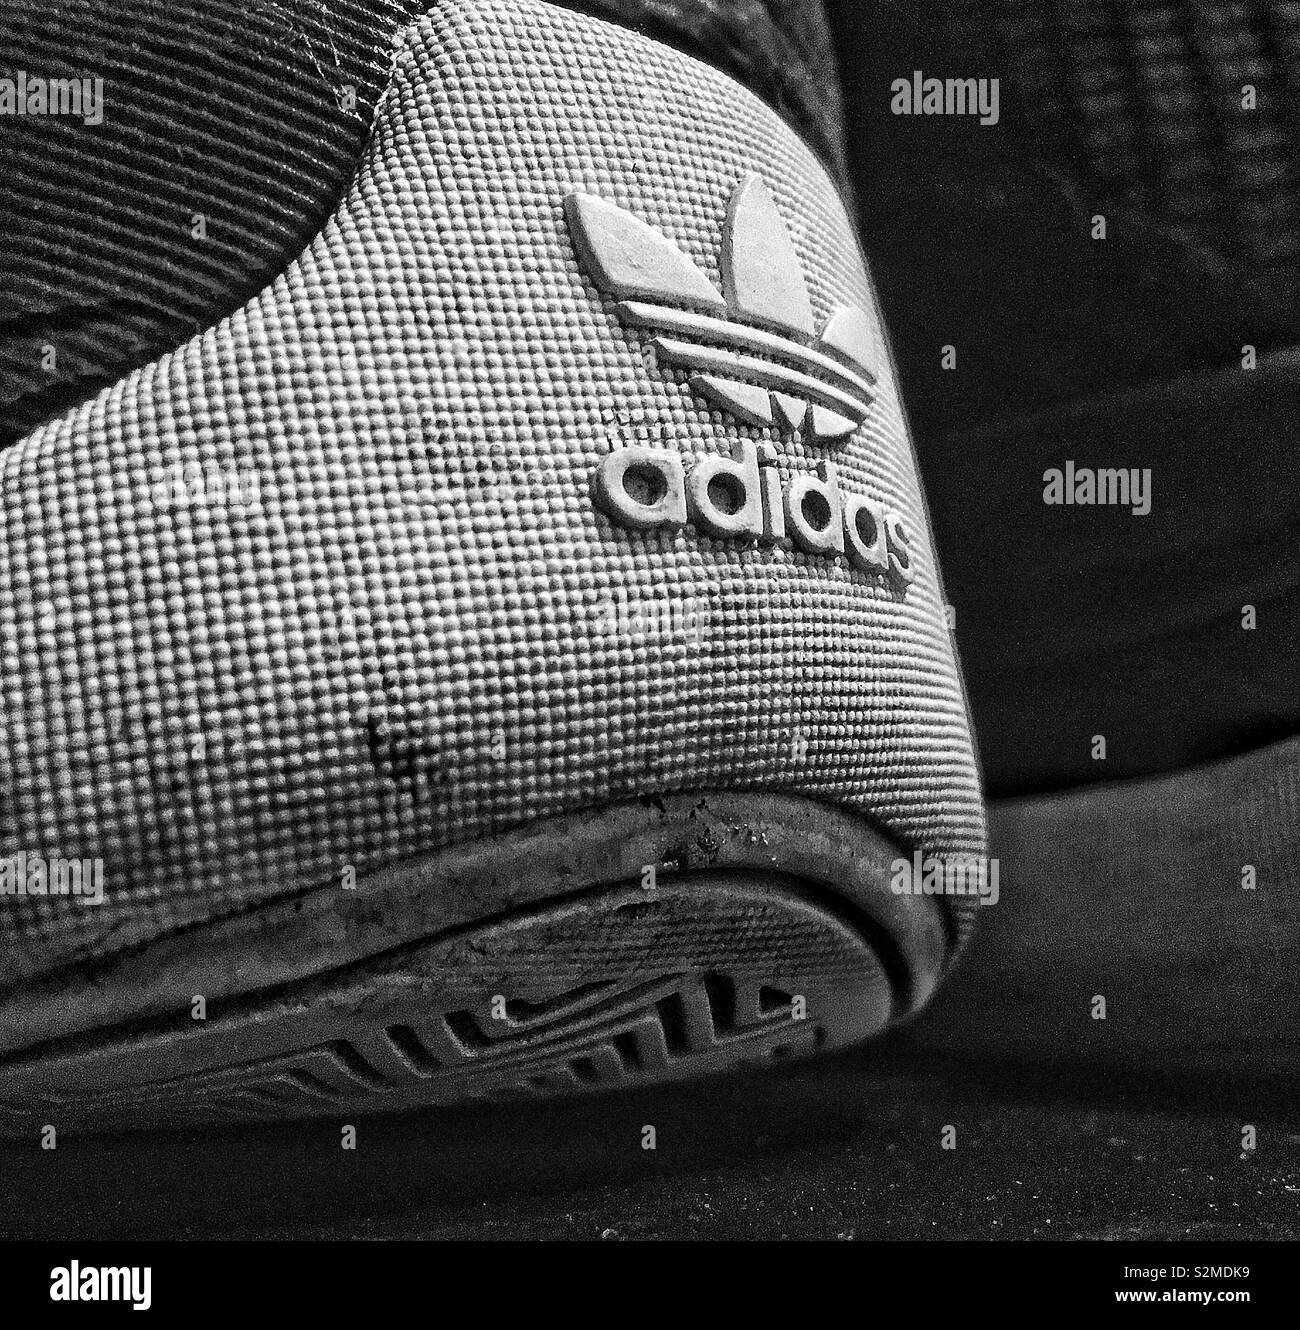 Adidas shoes Stock Photo